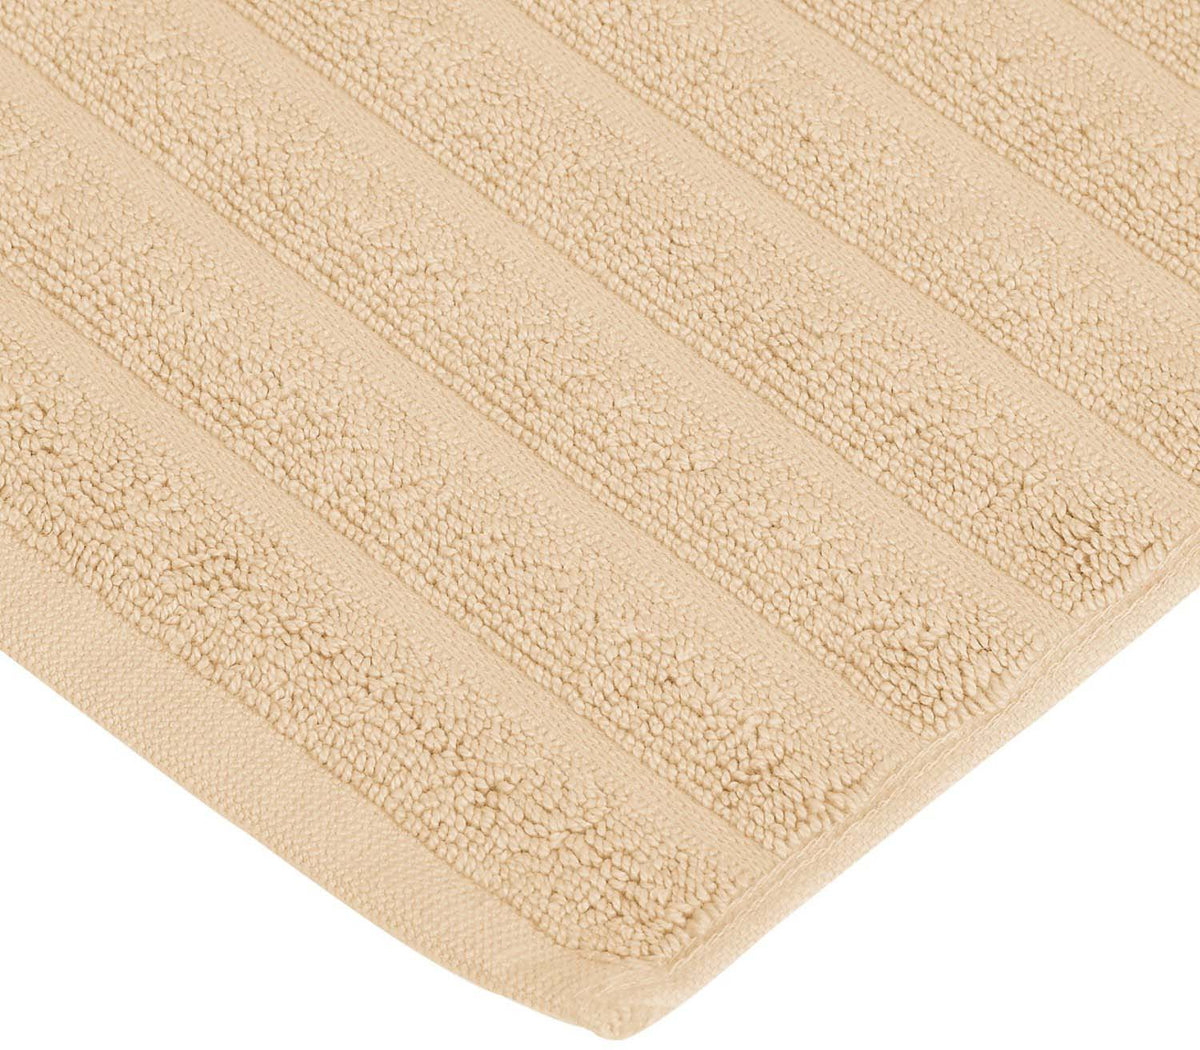 Lined 100% Cotton 1000 GSM 2-Piece Bath Mat Set - Camel